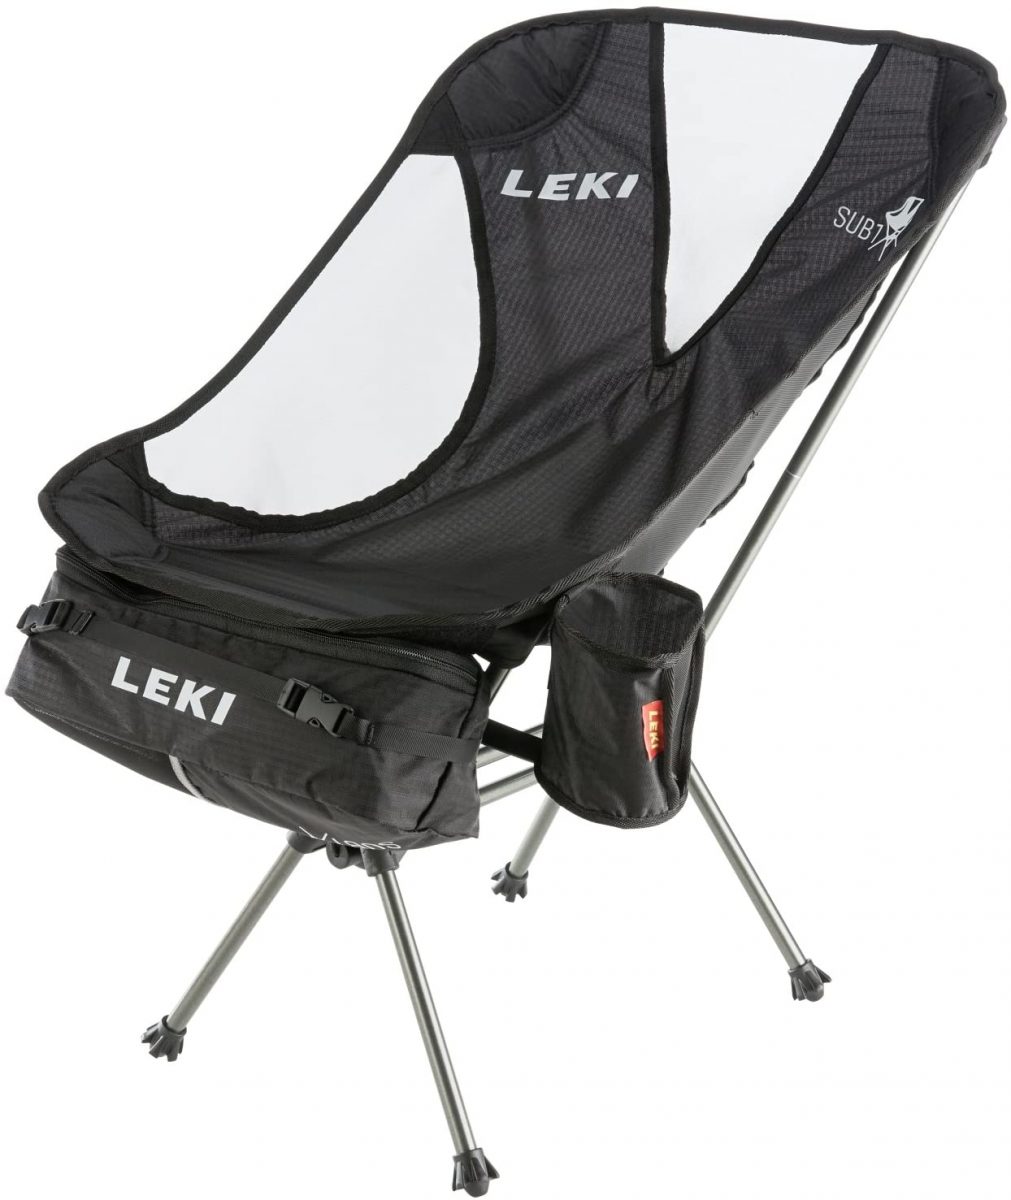 LEKI Sub1 Folding Chair